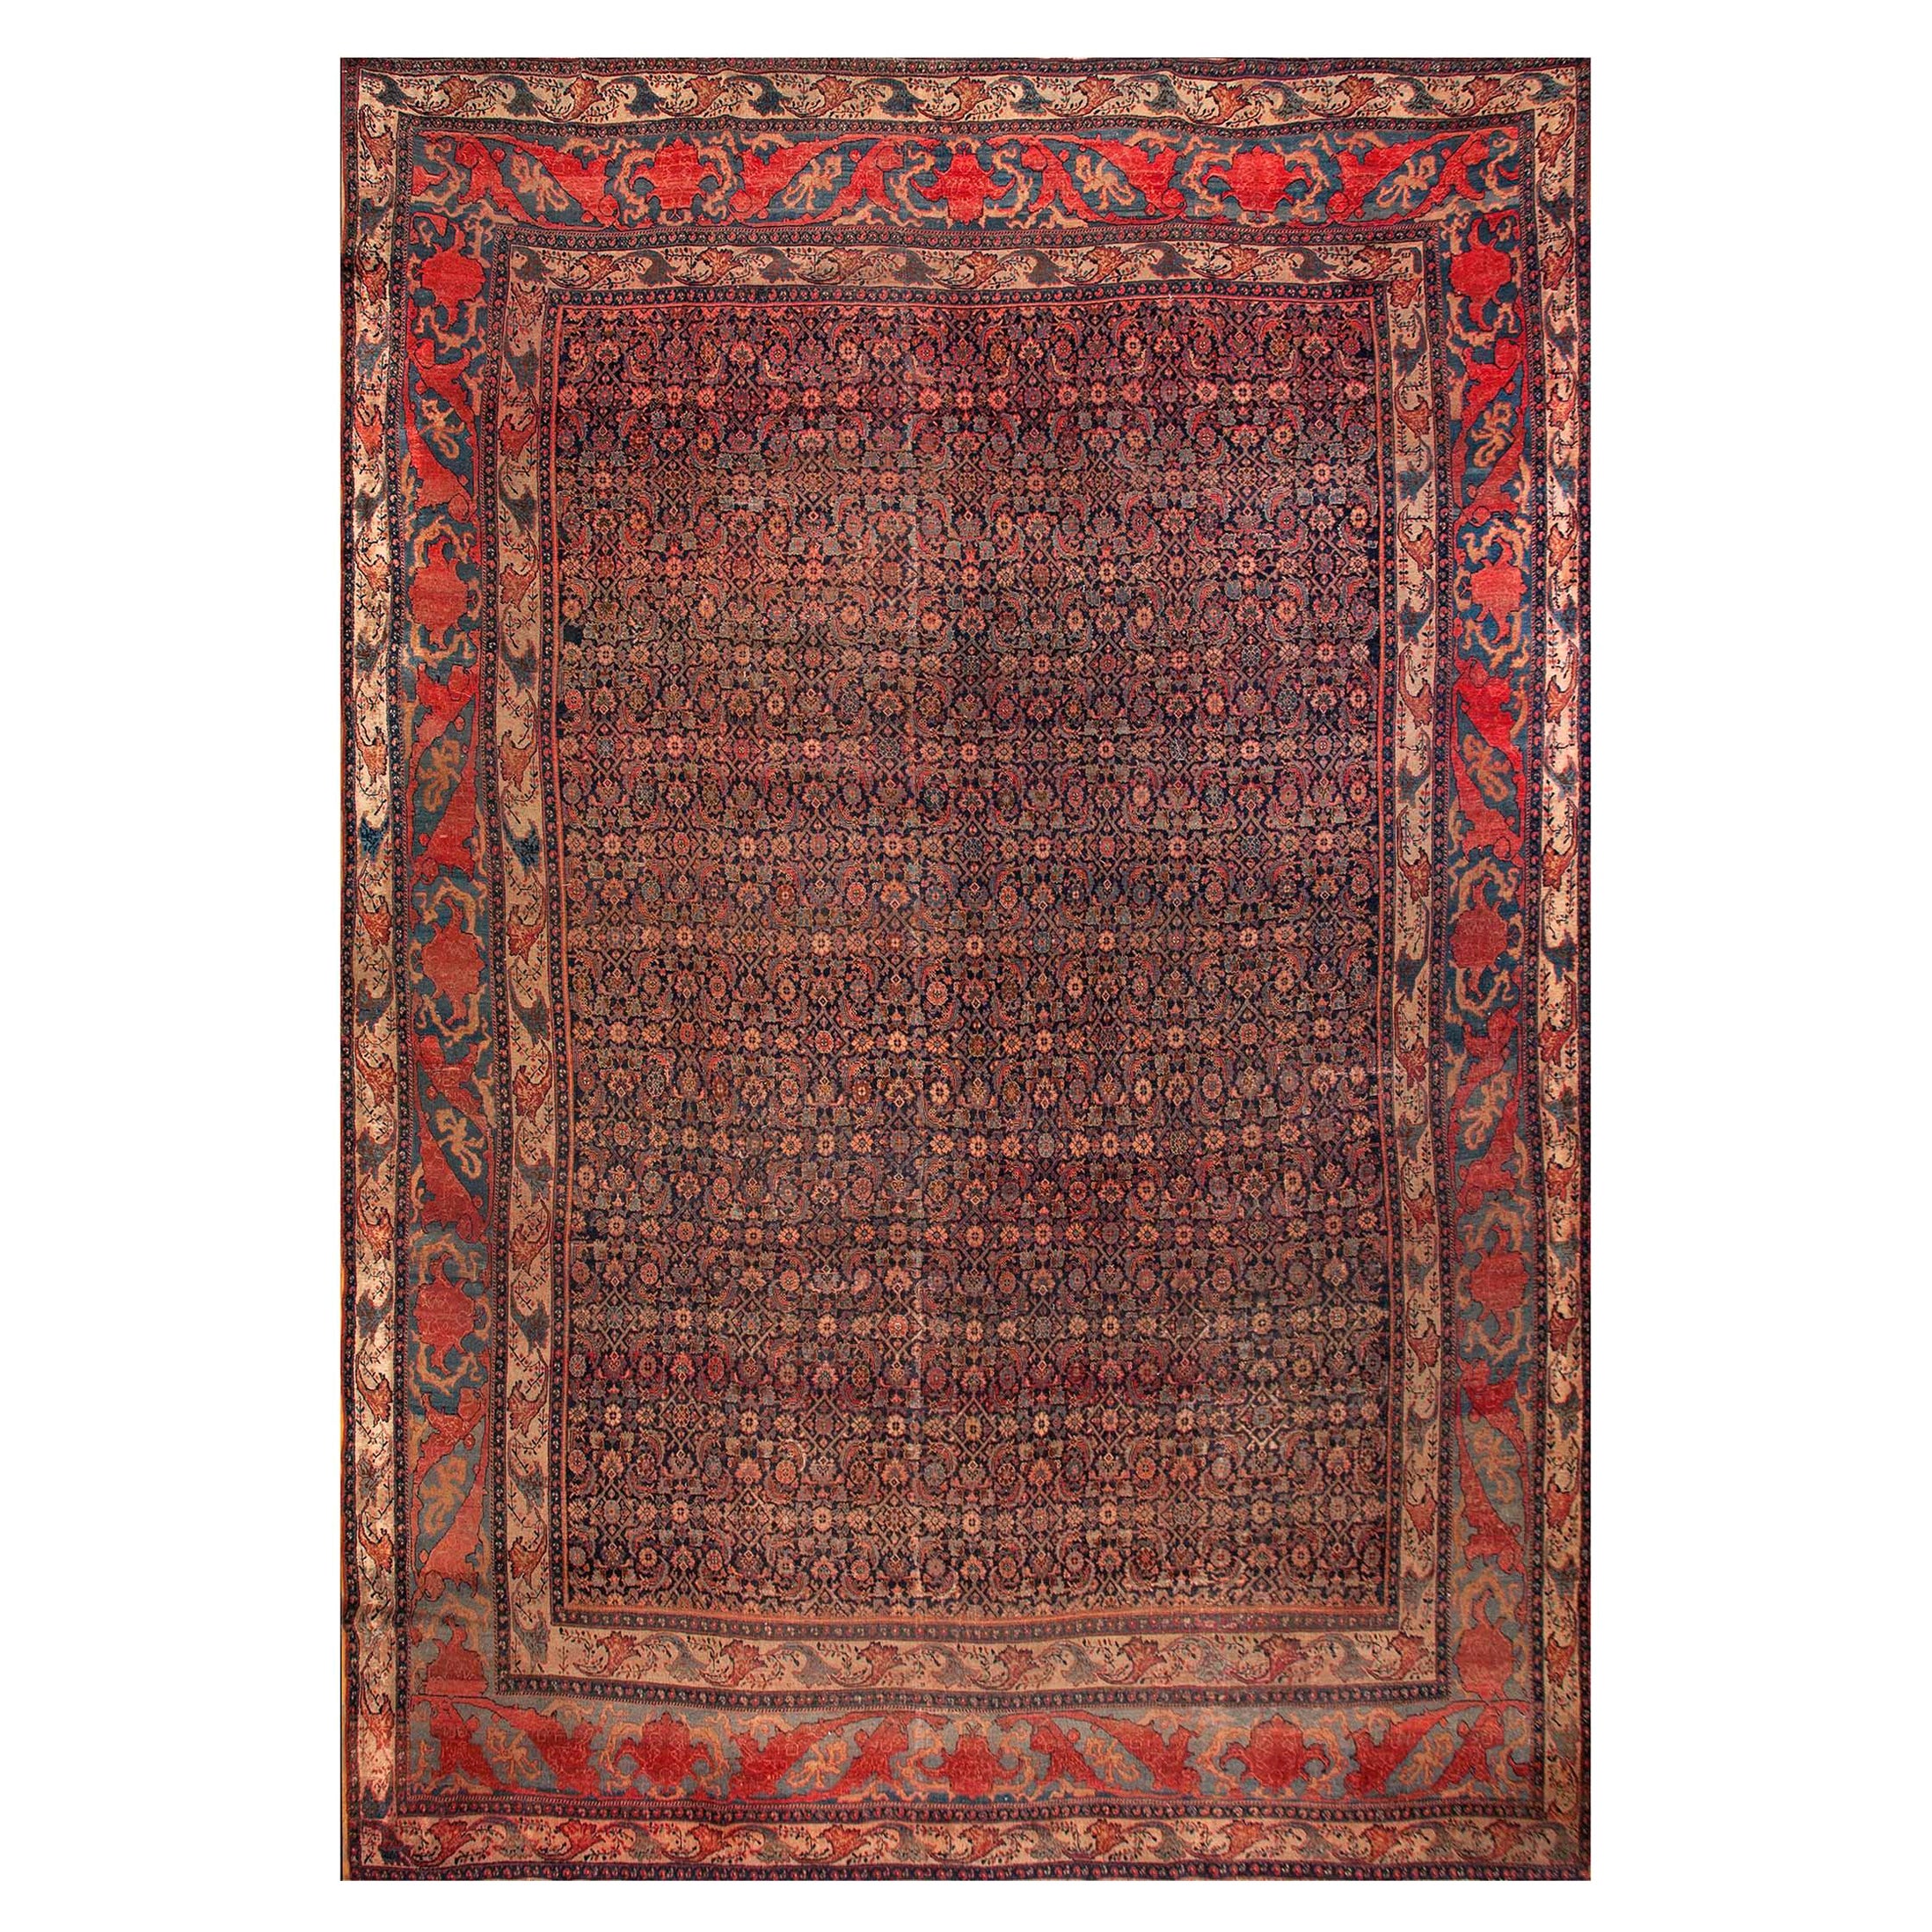 Late 19th Century Persian Bijar Carpet ( 12' 0'' x 18' 6'' - 365 x 563 cm ) For Sale